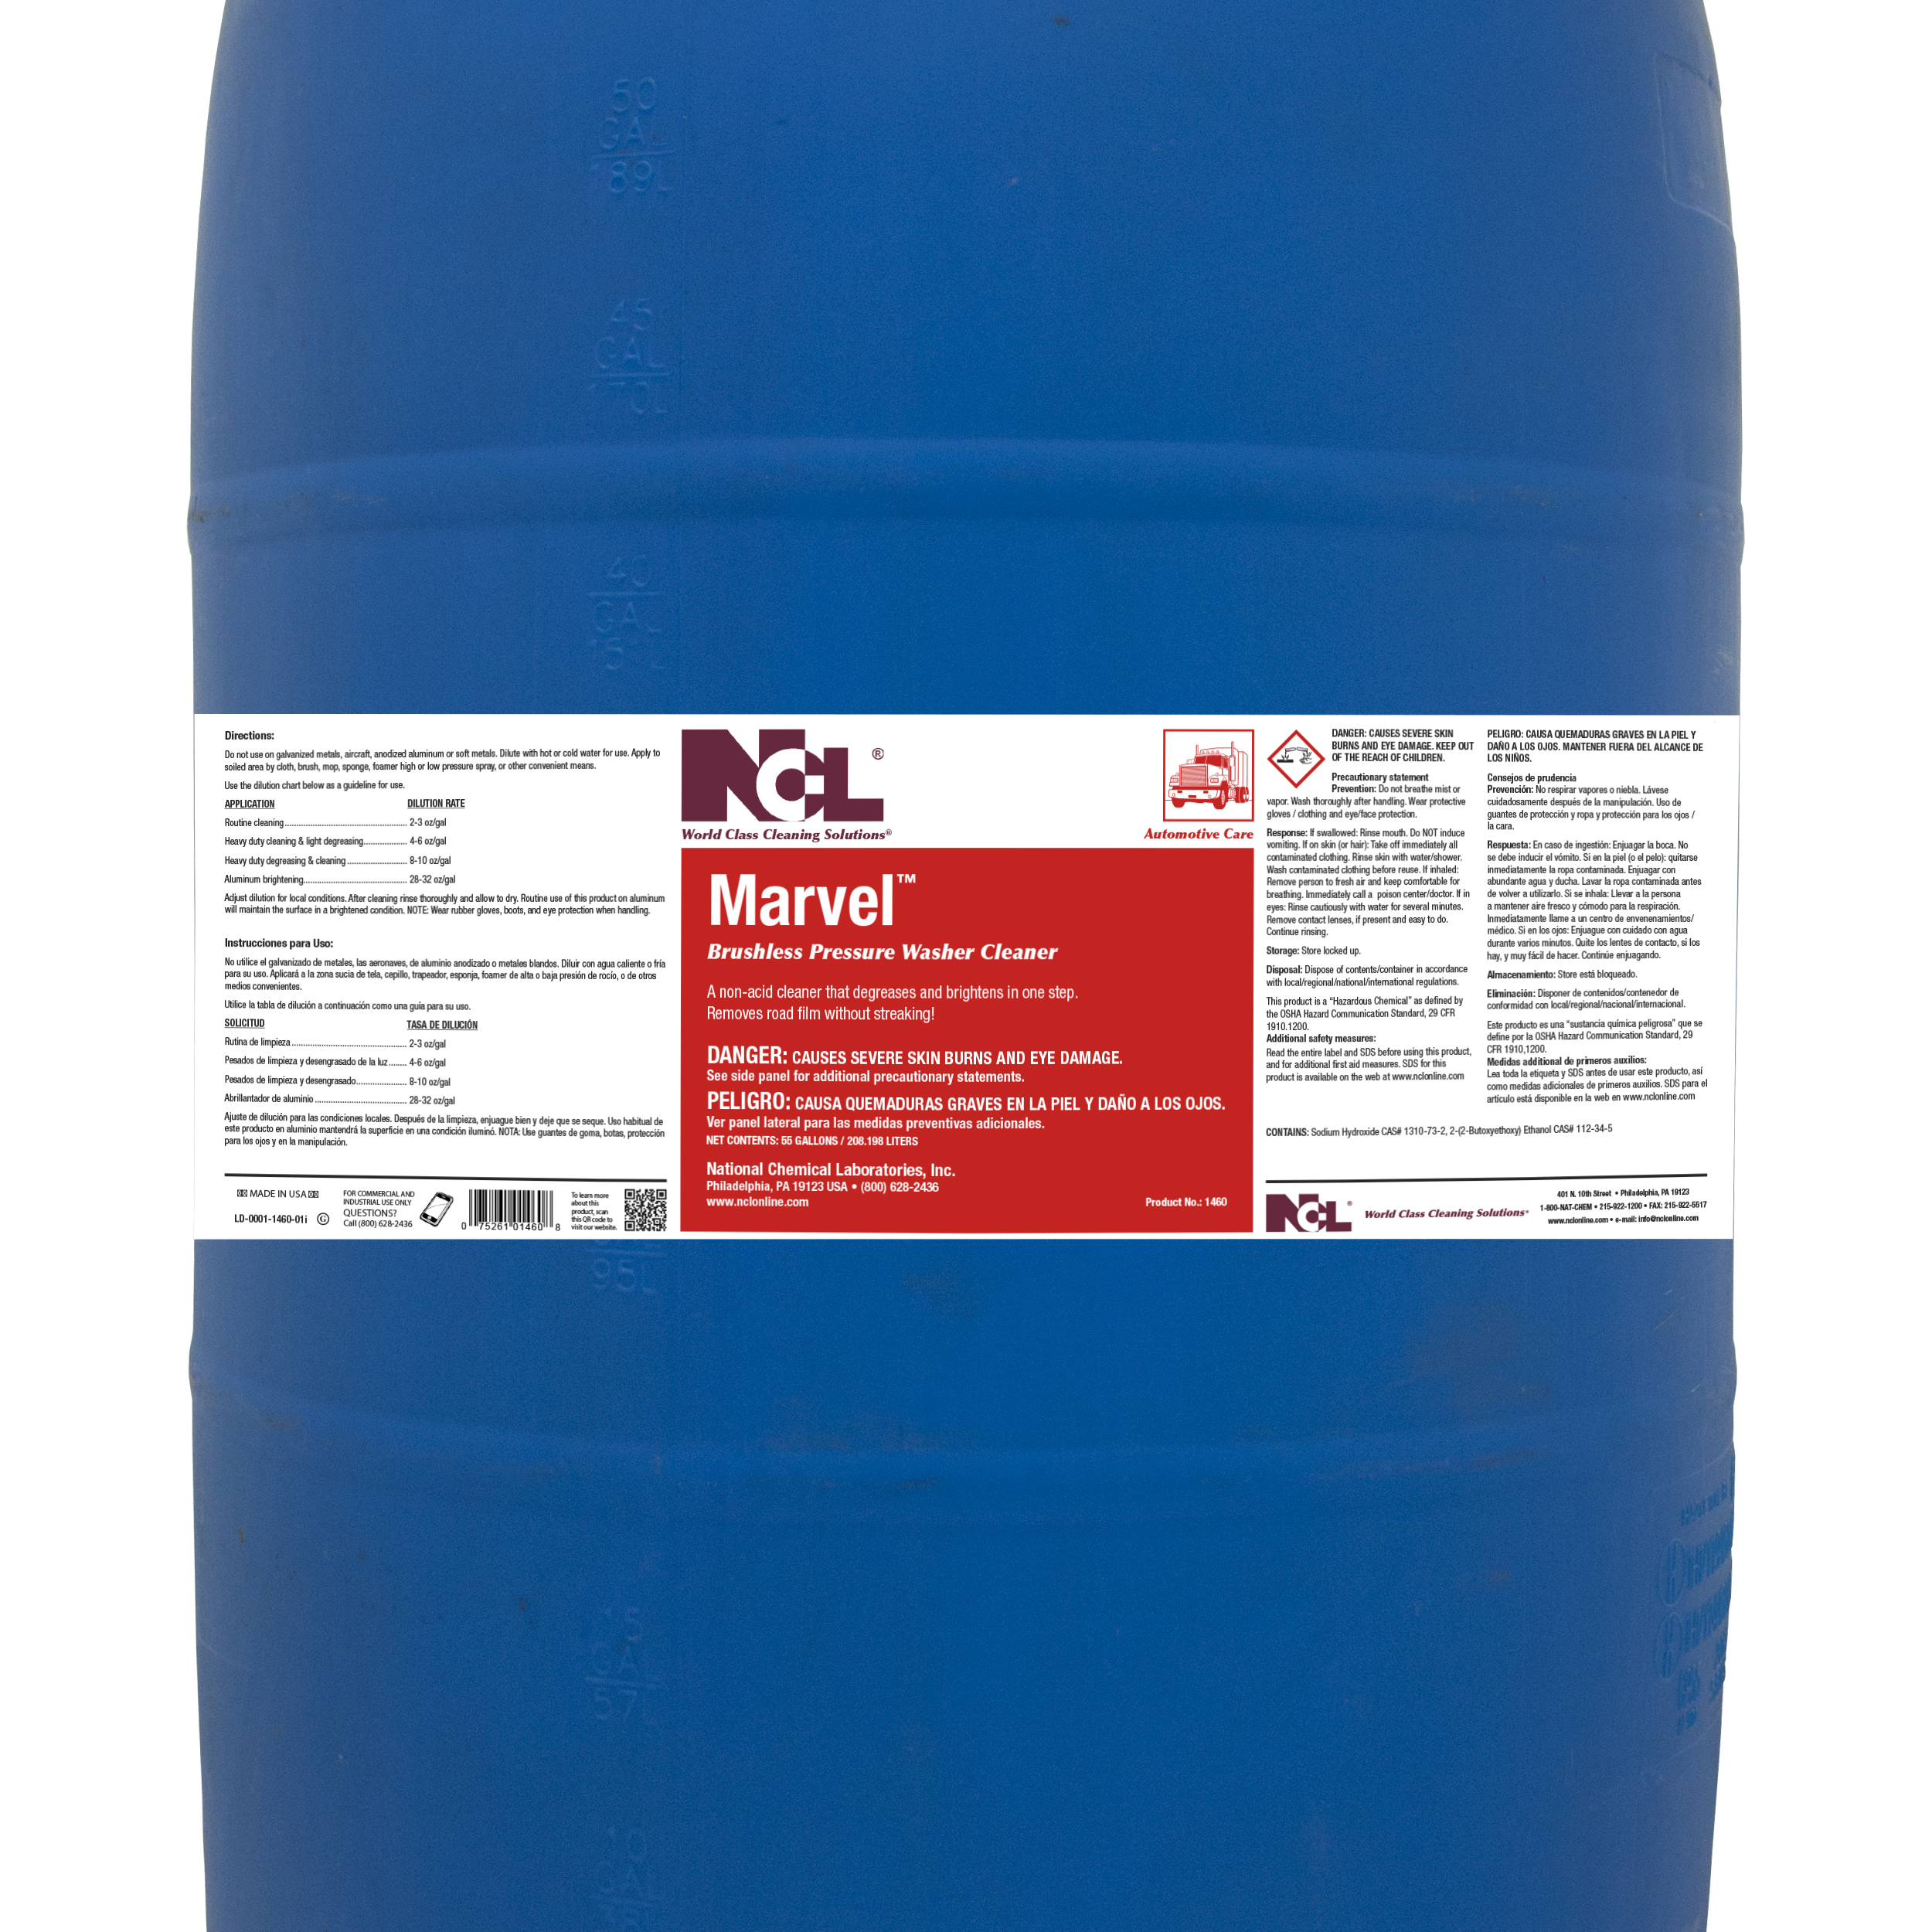  MARVEL Brushless Pressure Washer Cleaner 55 Gallon Drum (NCL1460-18) 